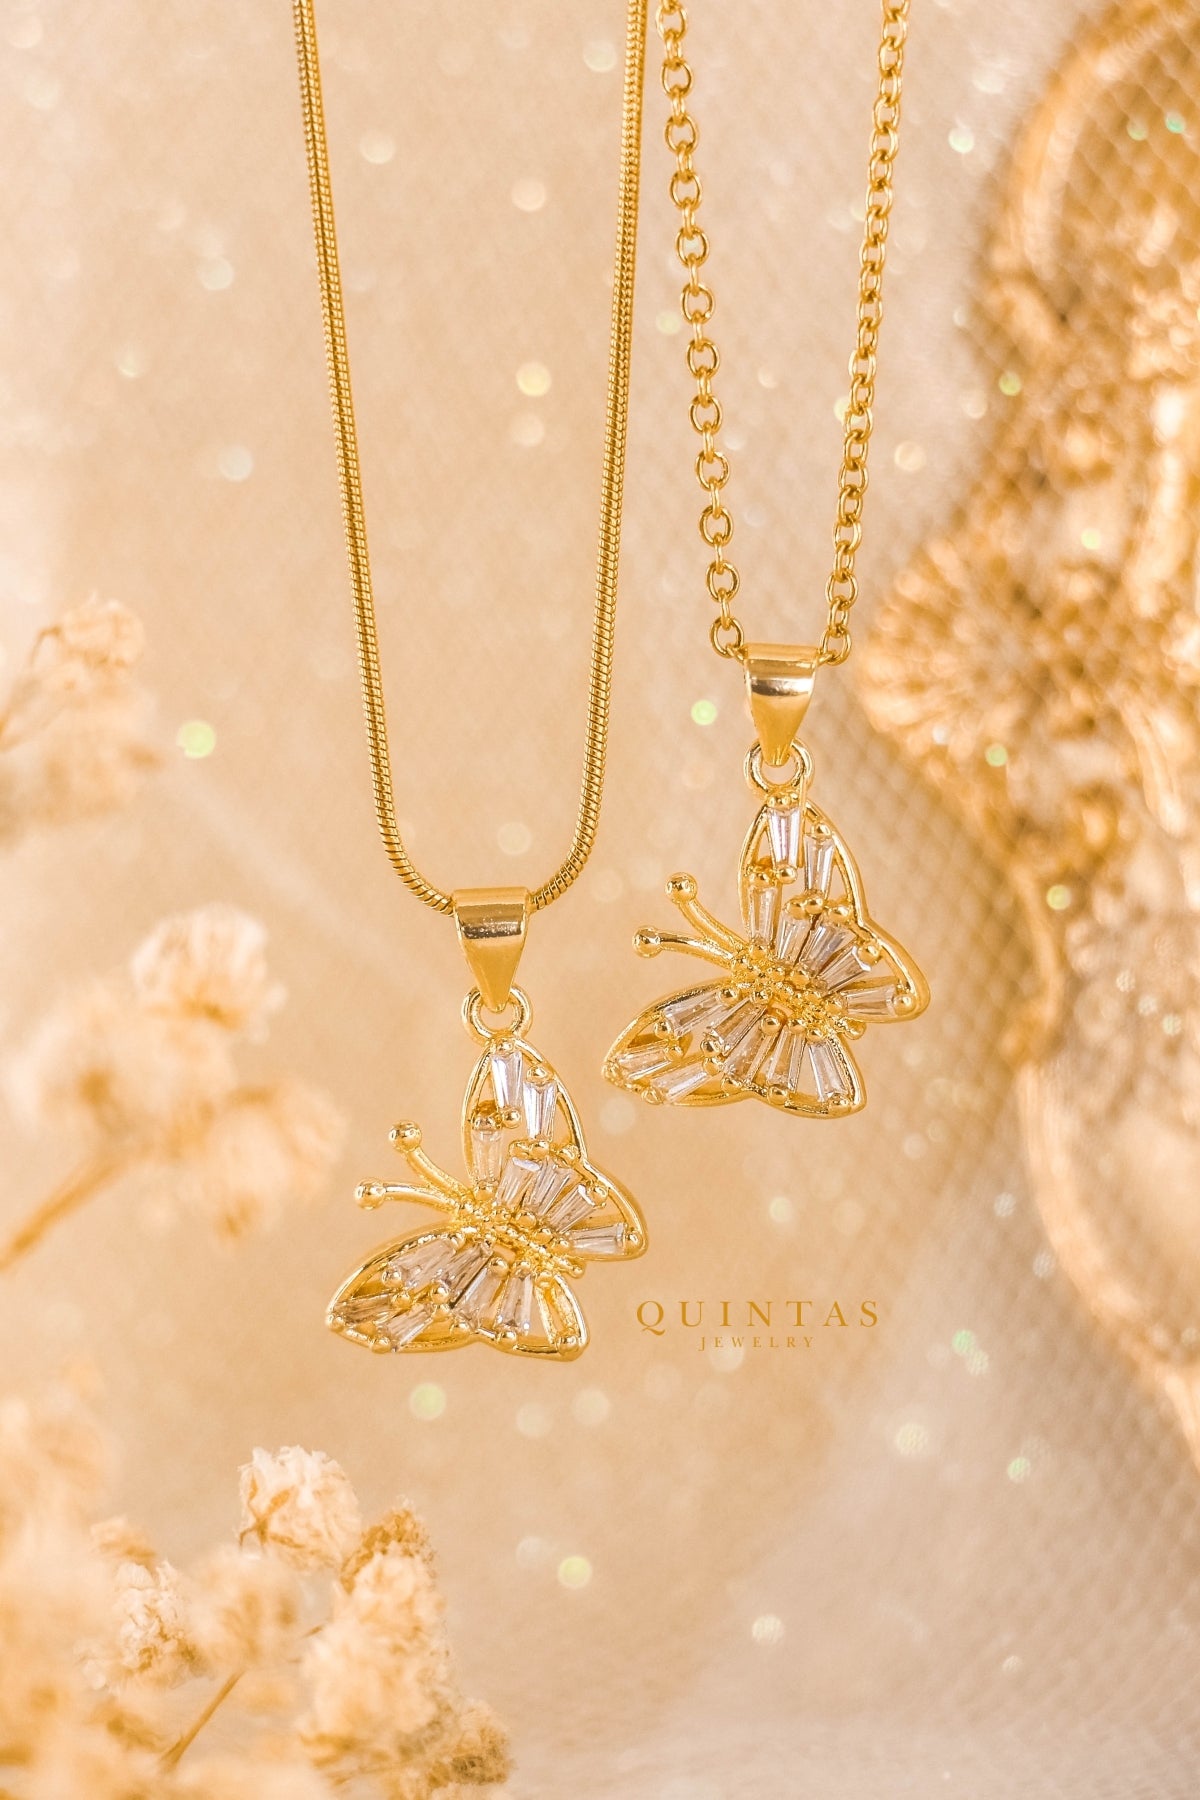 Glass Butterfly Necklace